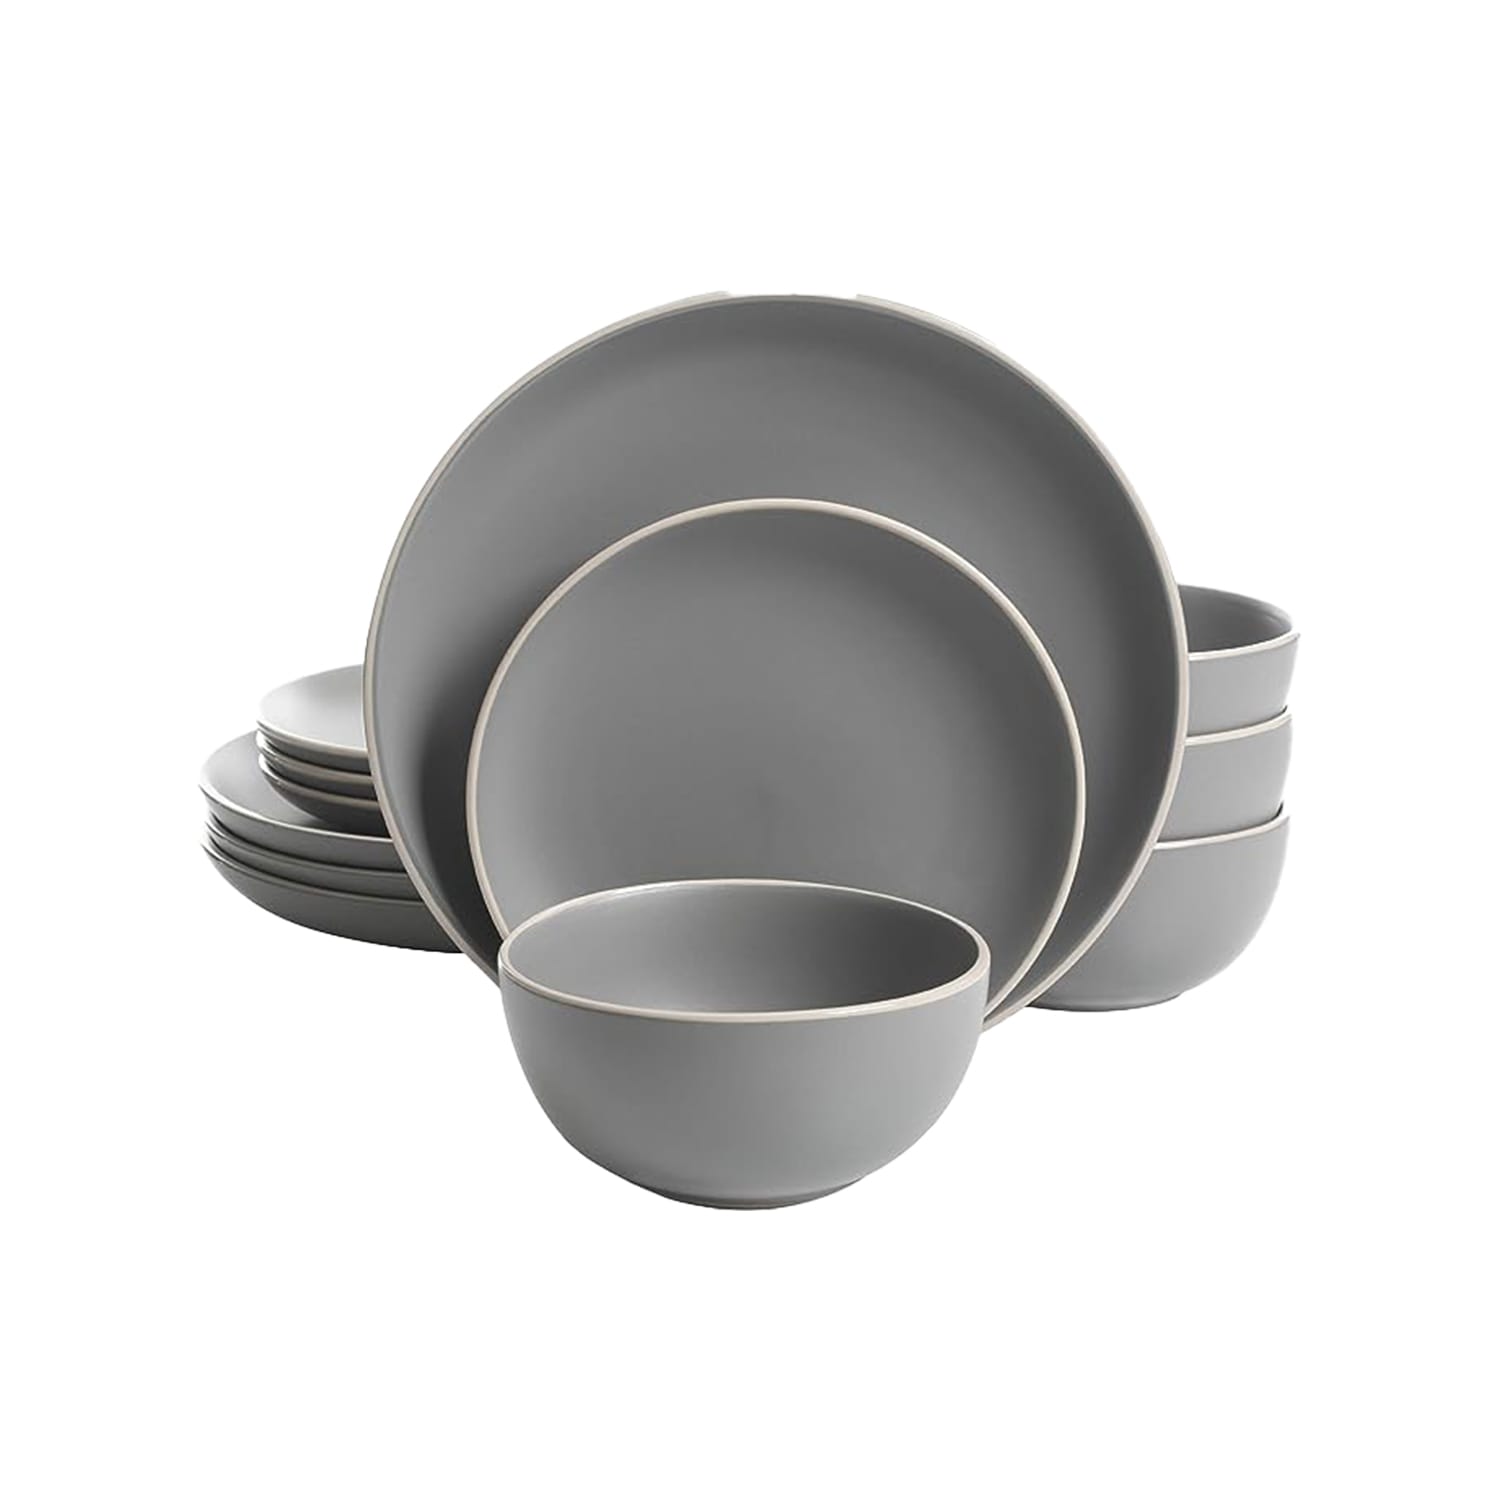 Costco Buys - I love this new 16-piece dinnerware set